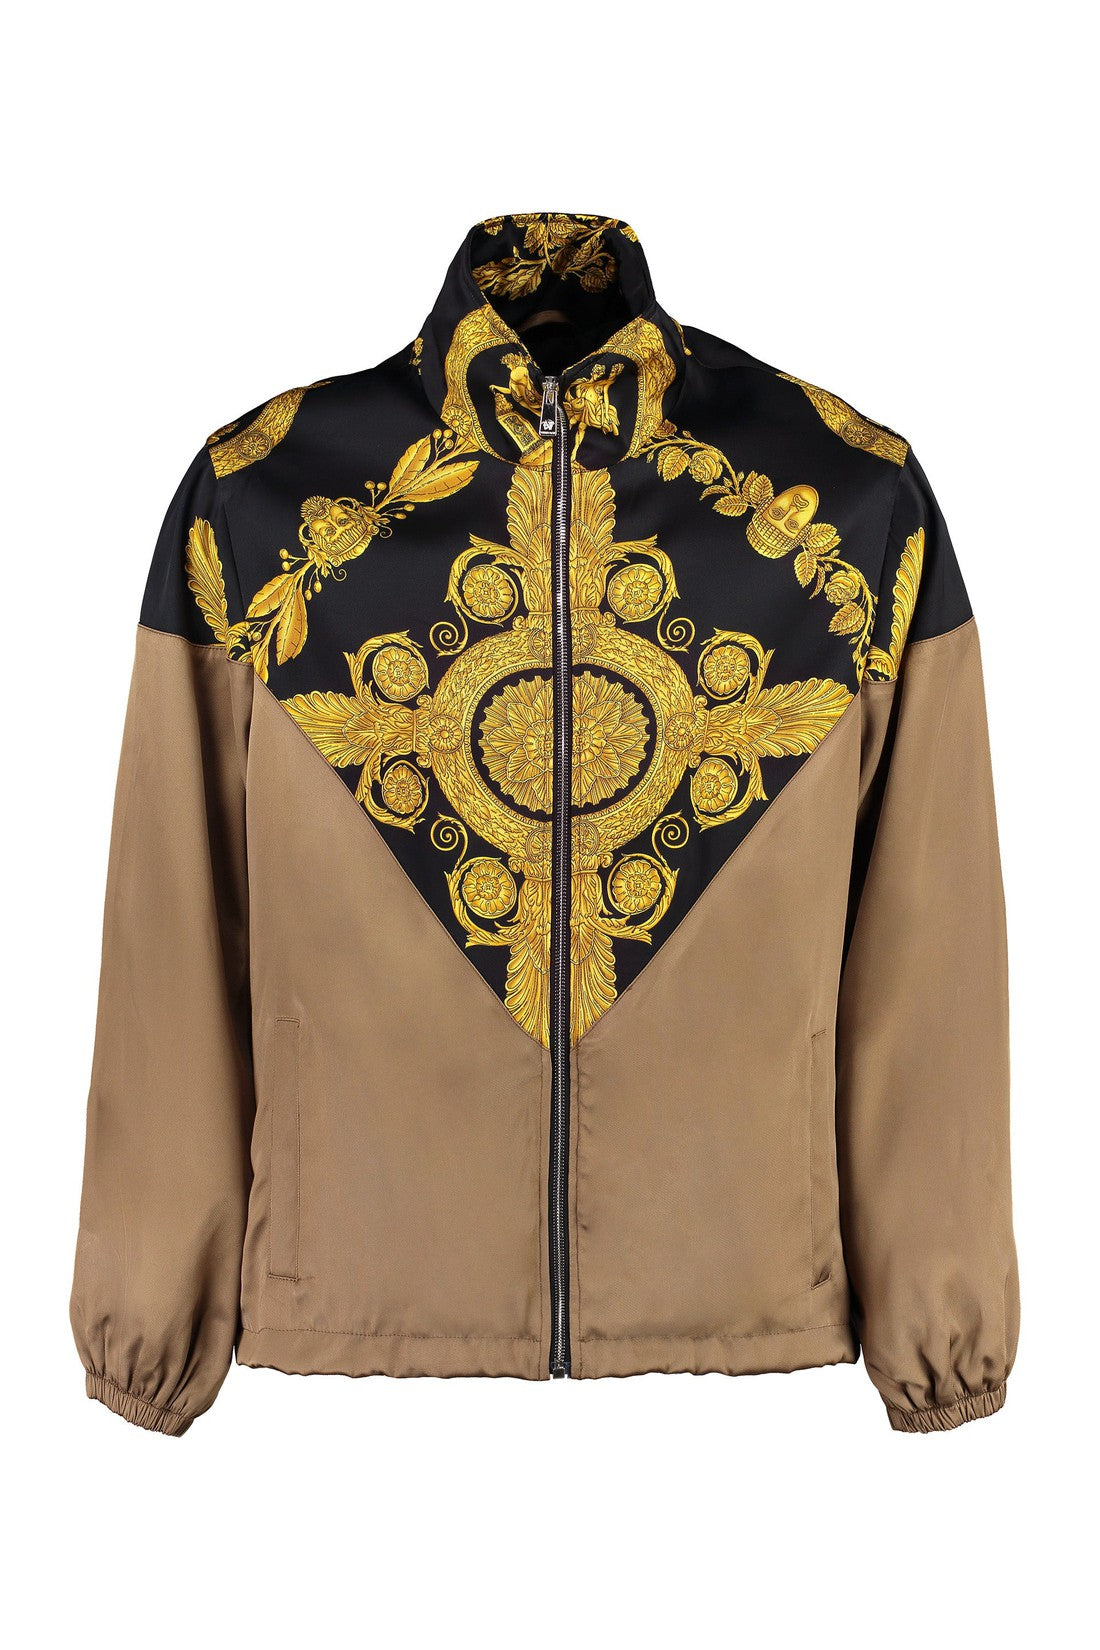 Versace-OUTLET-SALE-Techno fabric jacket-ARCHIVIST